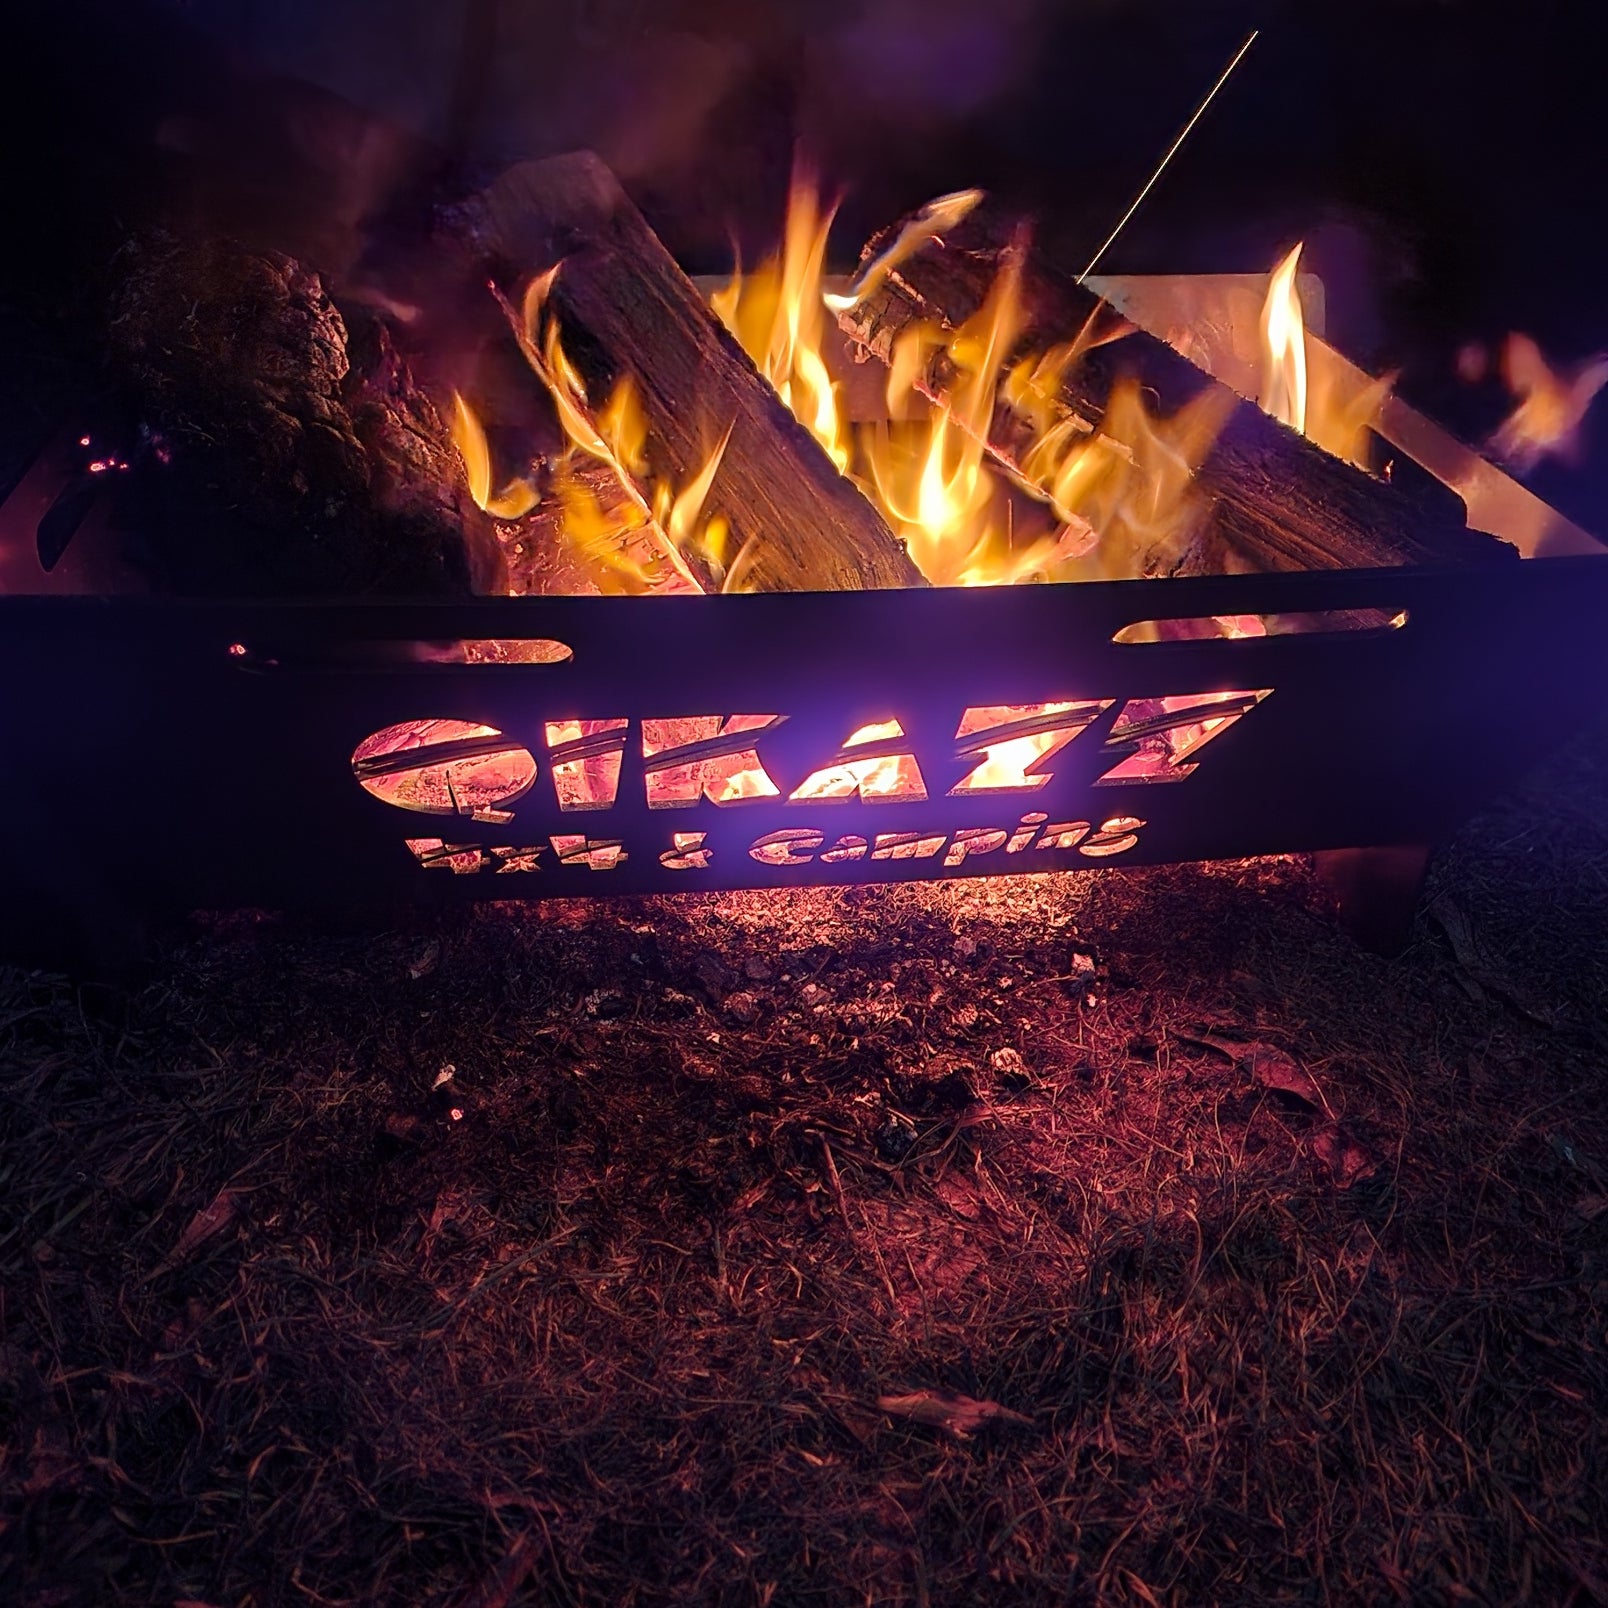 QIKAZZ Fire Pit | QIKAZZ 4x4 & Camping